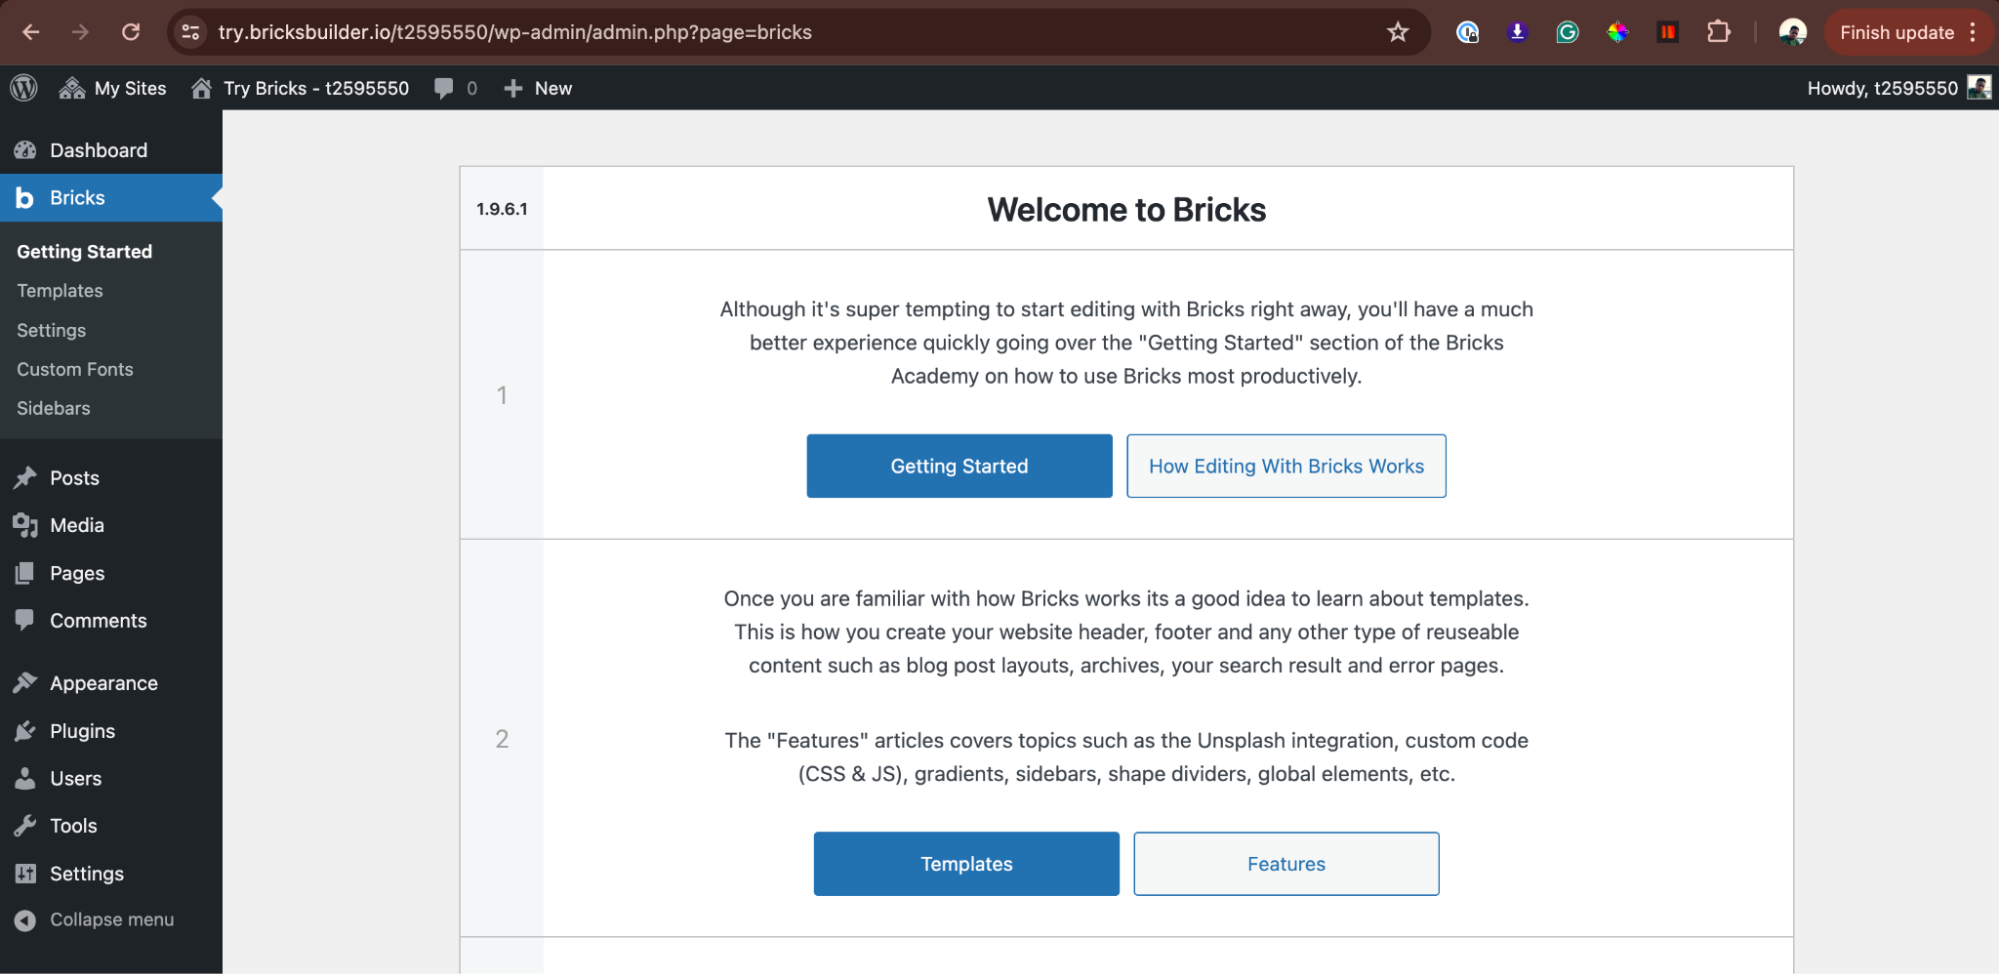 Welcome to Bricks WordPress dashboard interface